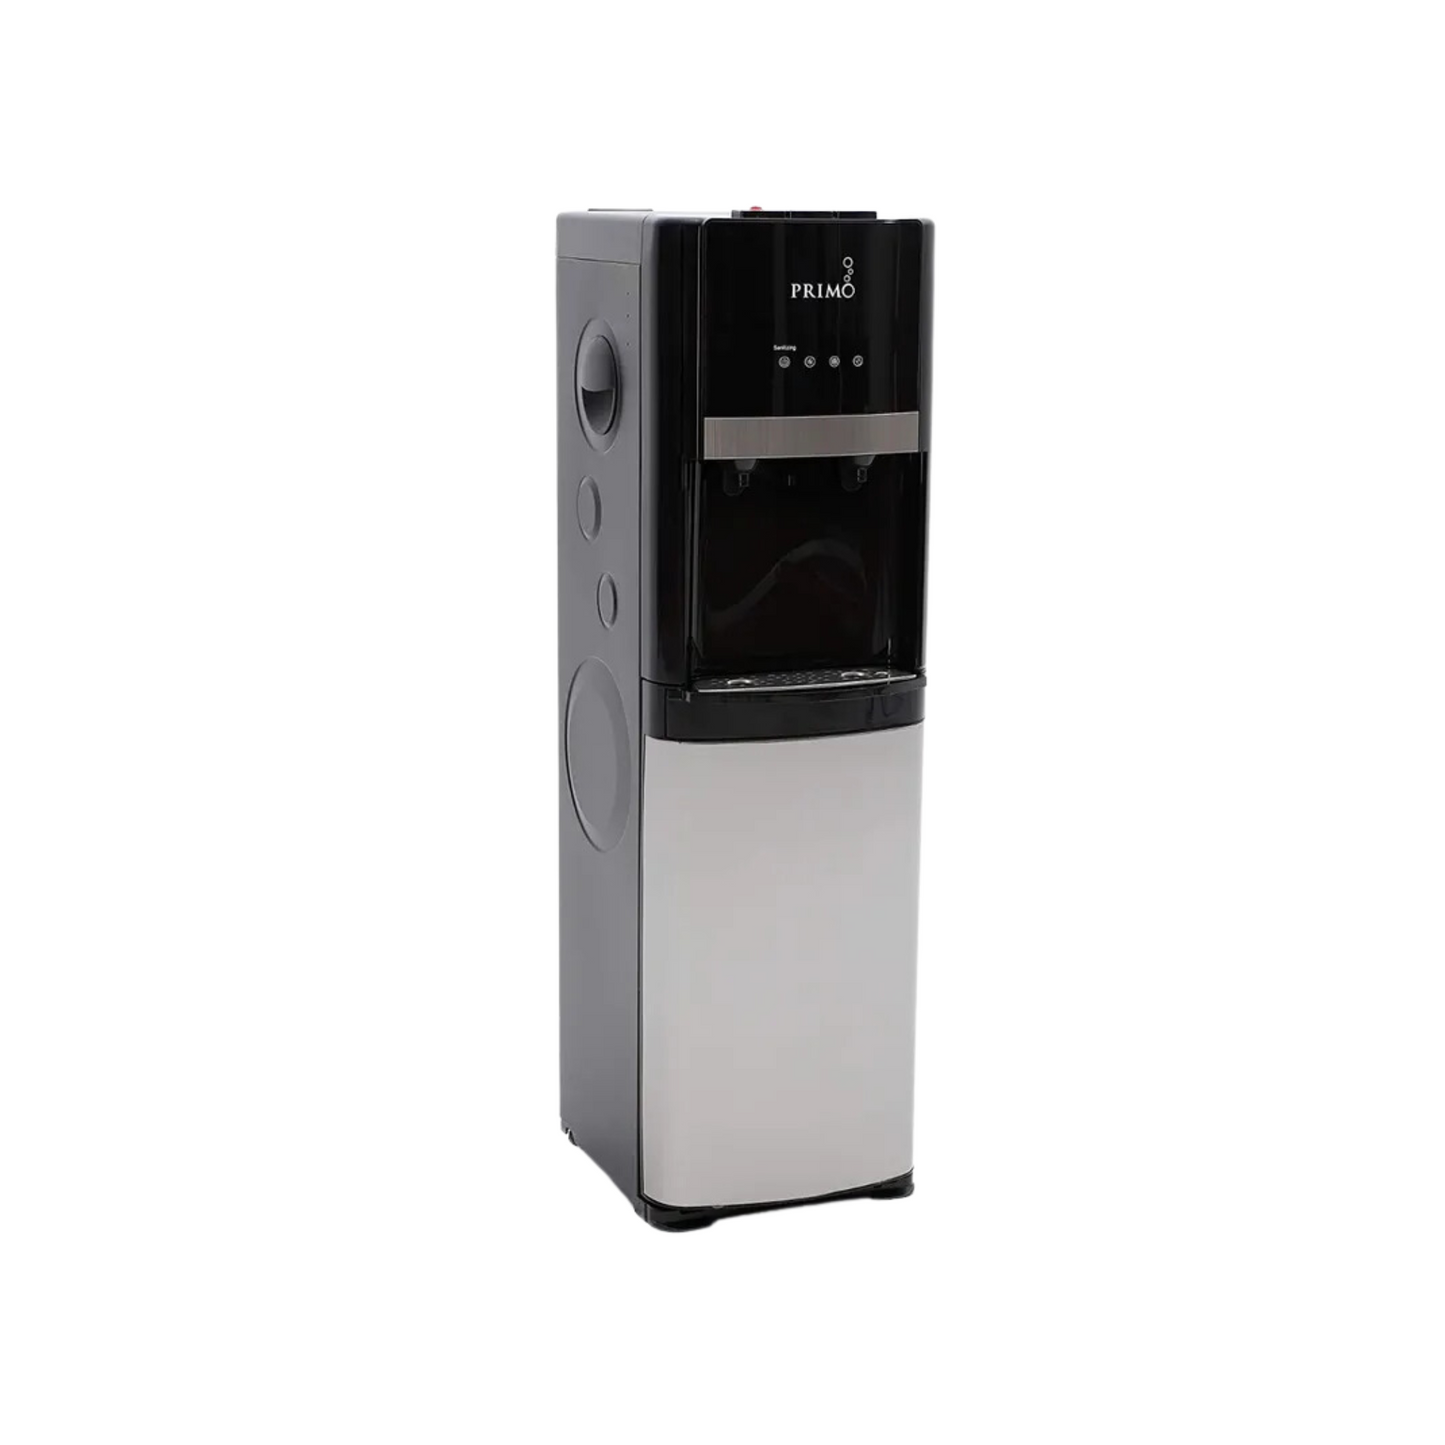 Bottom Loader Water Dispenser Stainless Steel Self Sanitizing - Hot & Cold Water